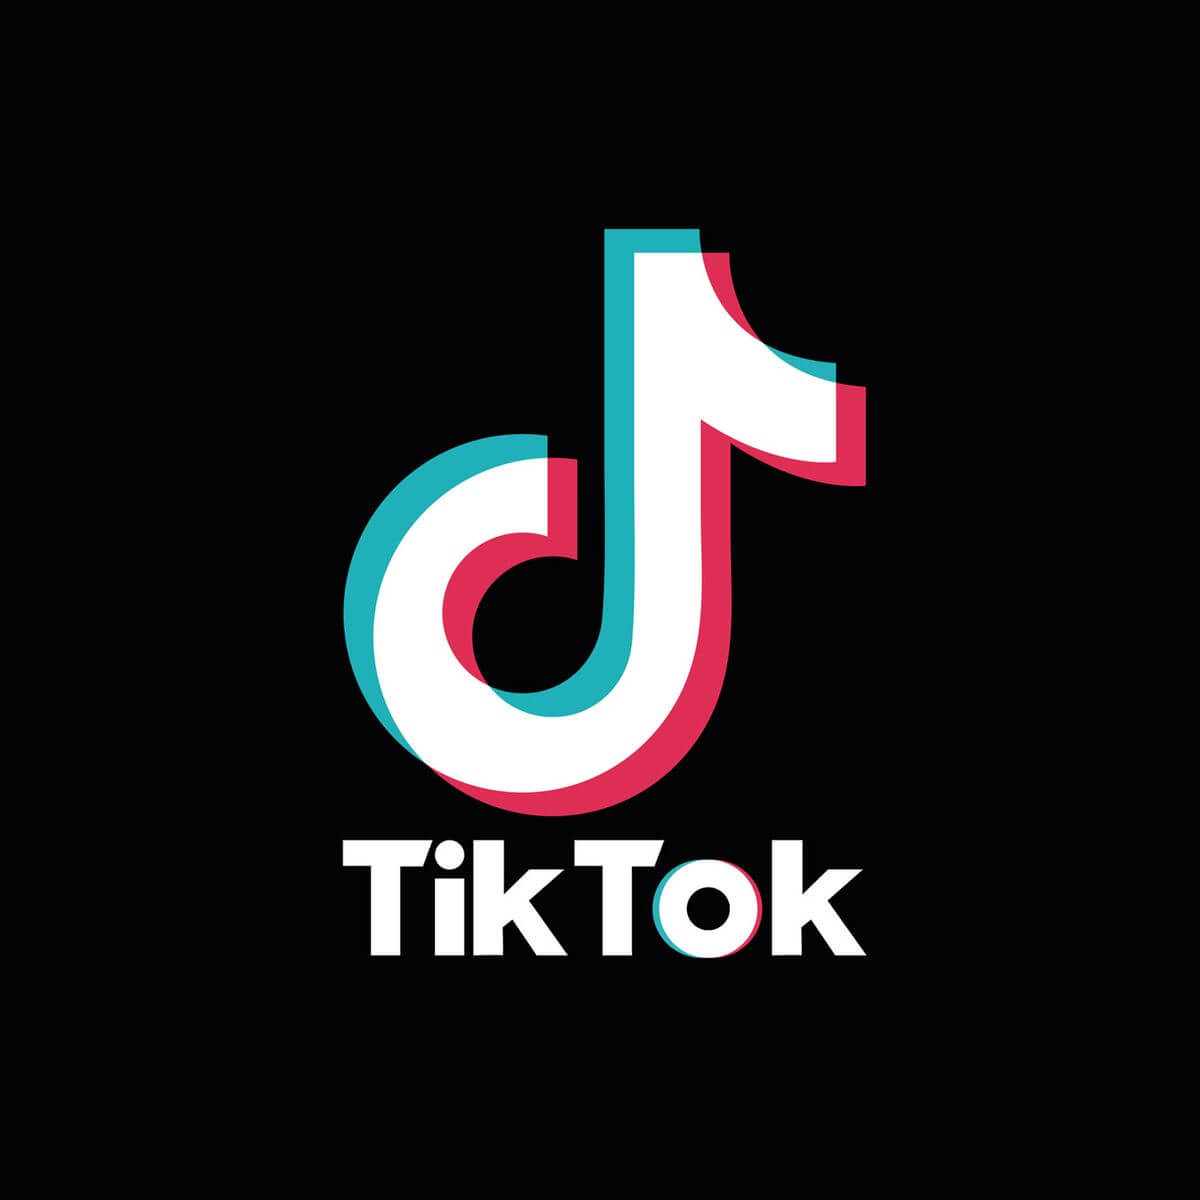 United States considering a ban on popular social media app Tik Tok